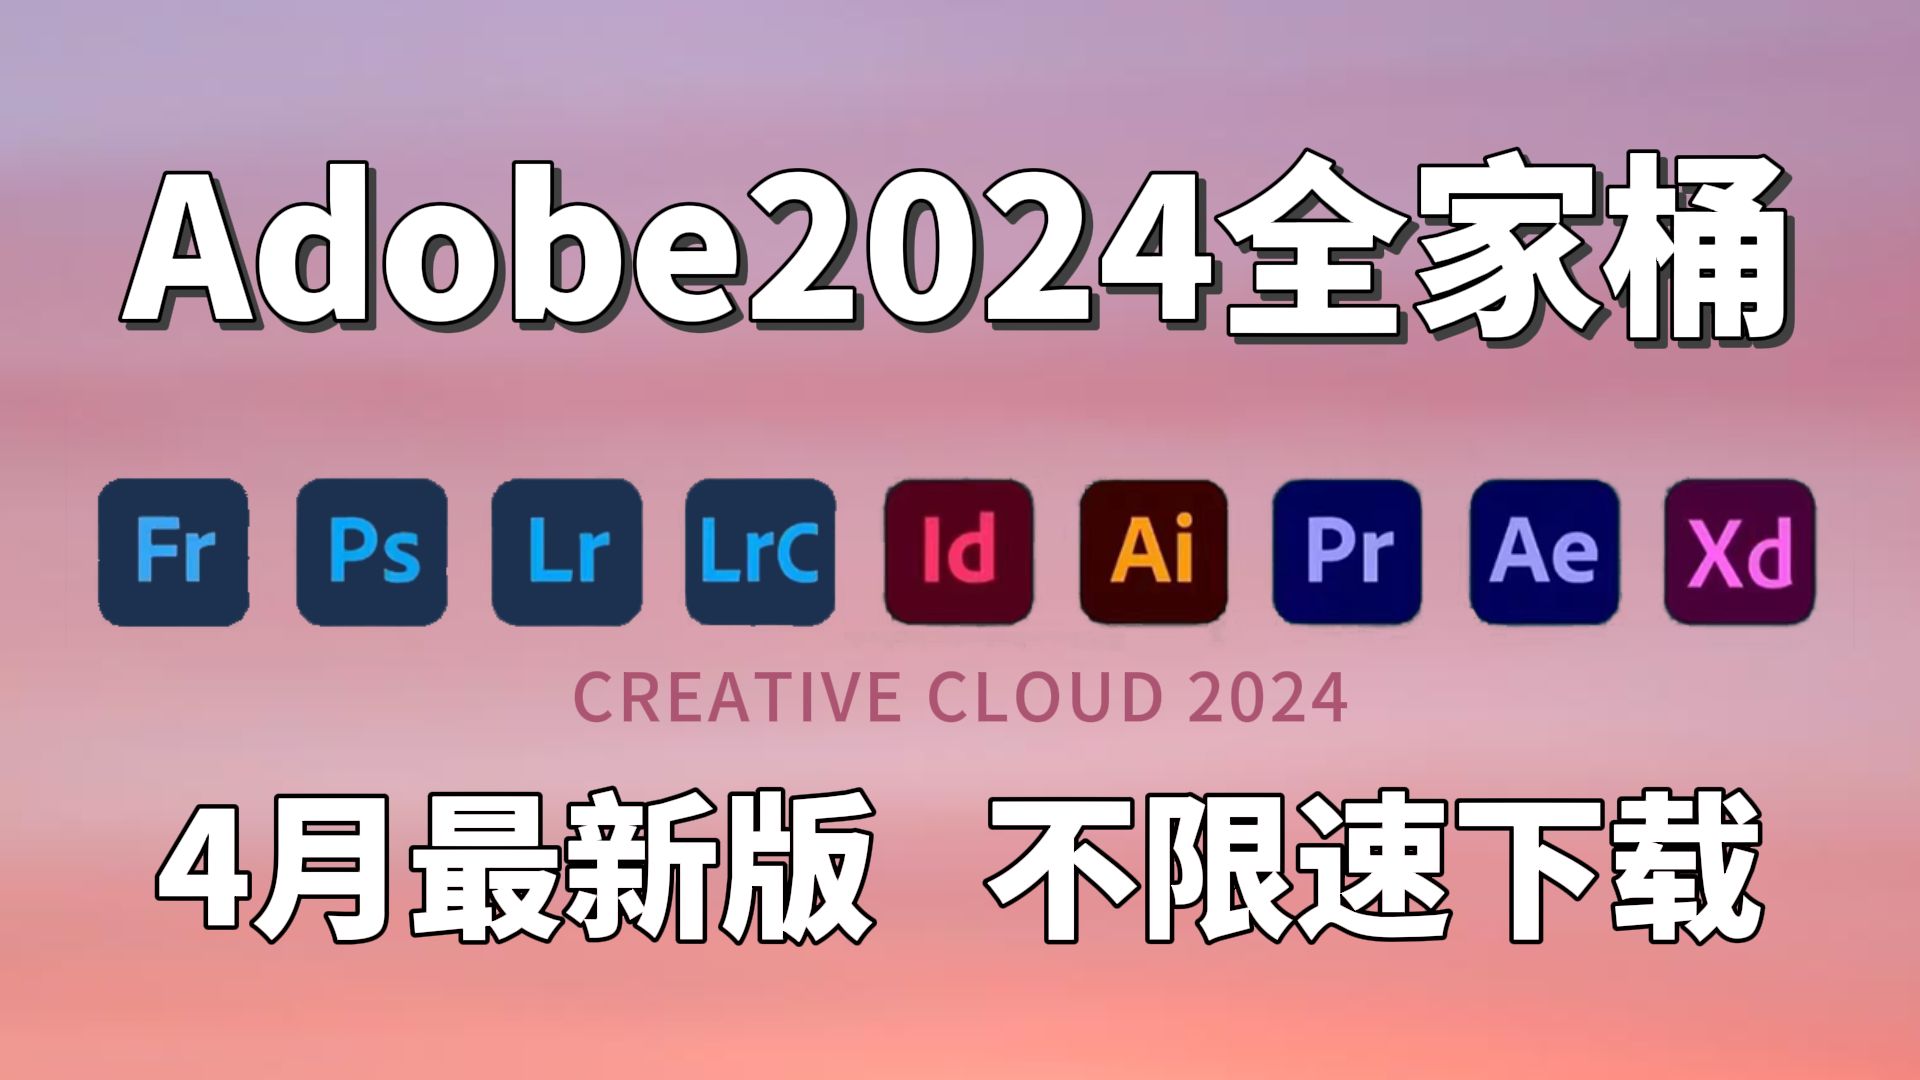 【Adobe全家桶2024】4月最新版 免费下载！PR AE AI AU PS CAD等等！安装即激活！白嫖系列！永久使用！